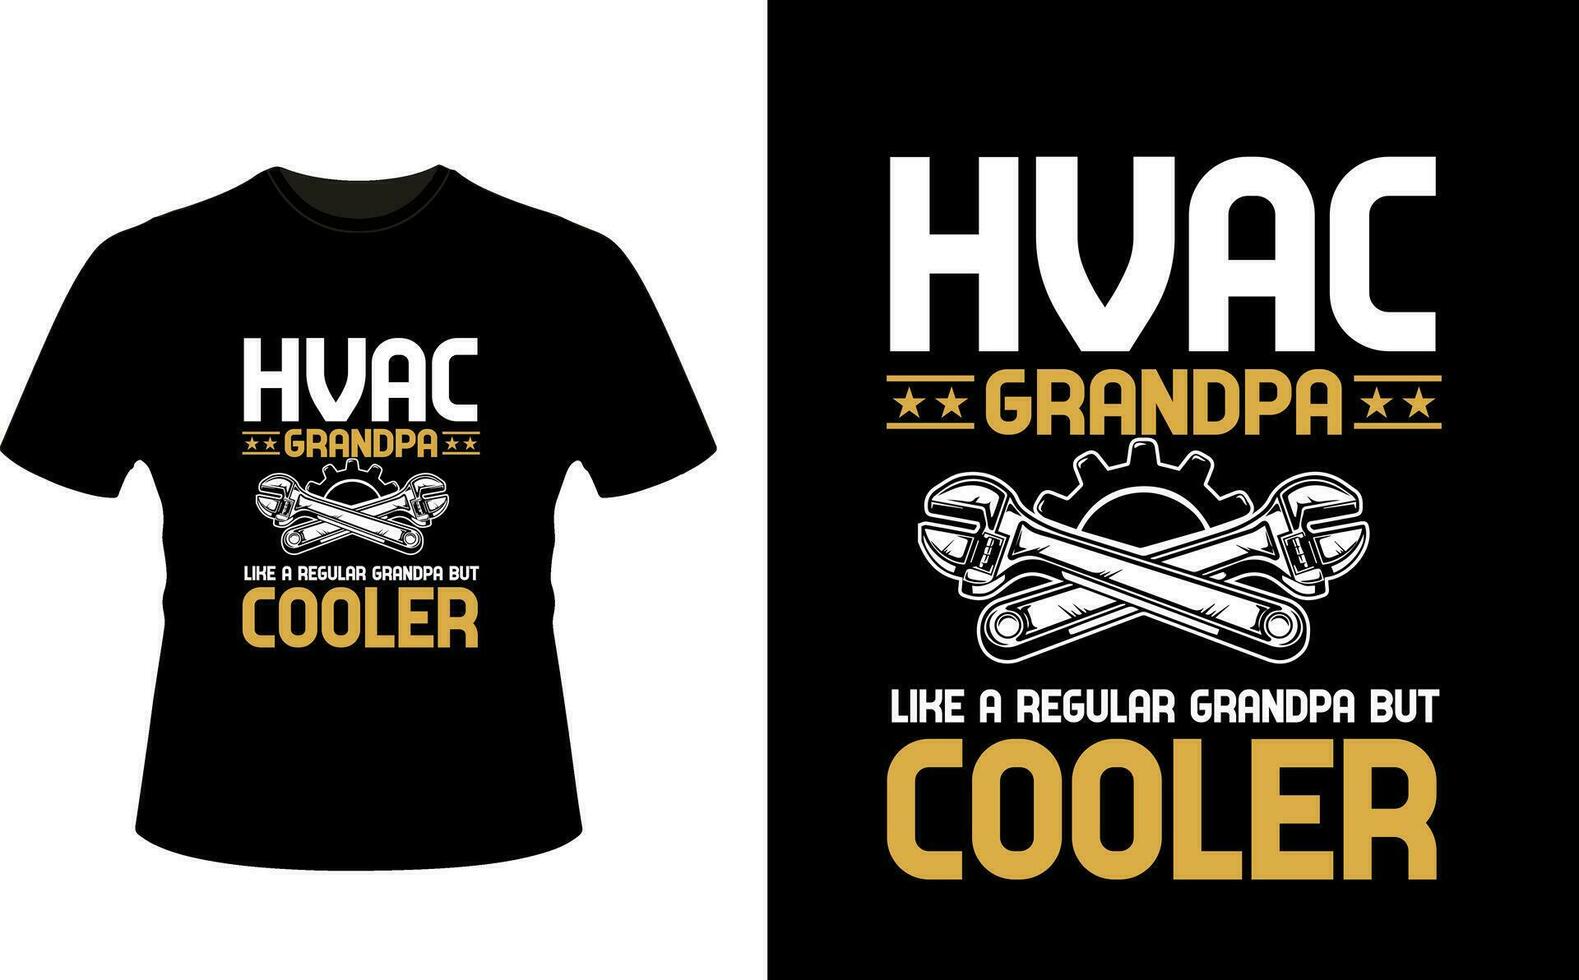 HVAC Grandpa Like a Regular Grandpa But Cooler or Grandfather tshirt design or Grandfather day t shirt Design vector